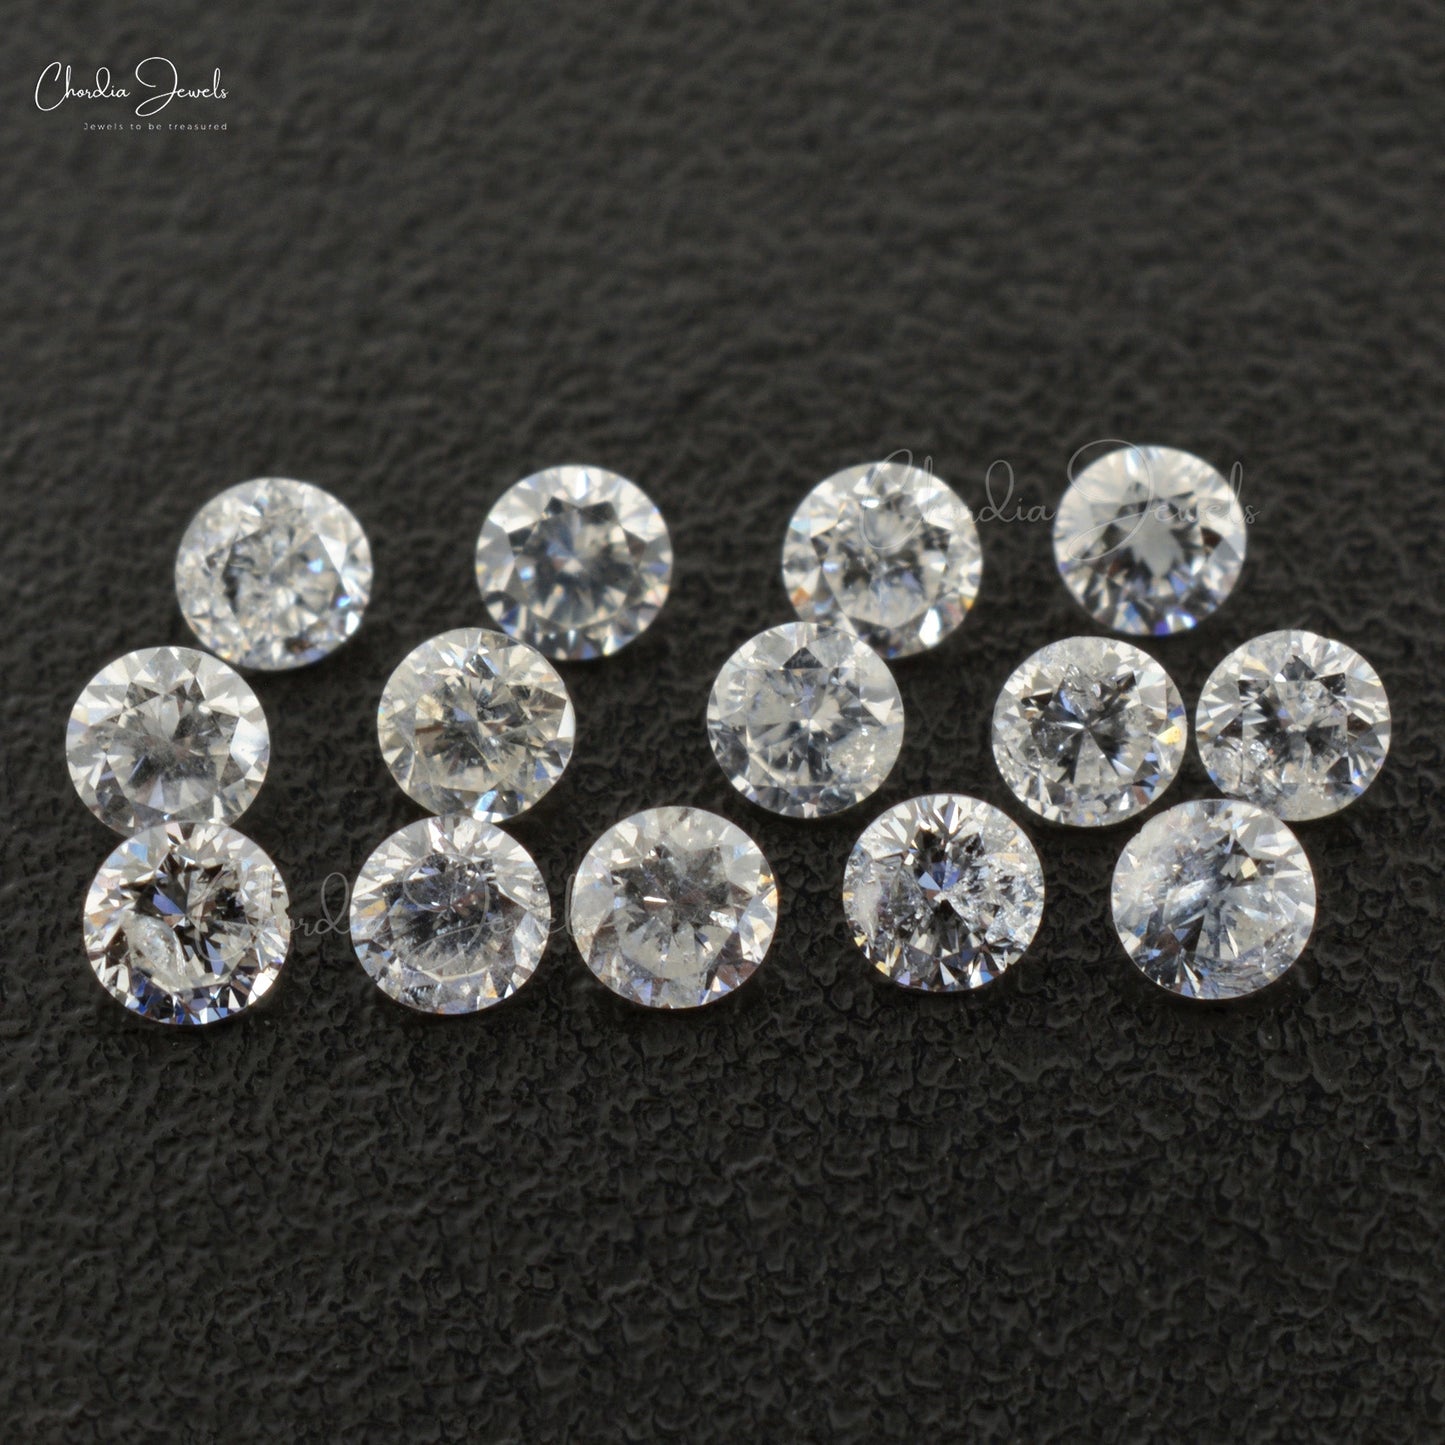 White Diamond I1-I2 / G-H Round Excellent Cut 1.70 MM Loose Gemstone, 1 Piece